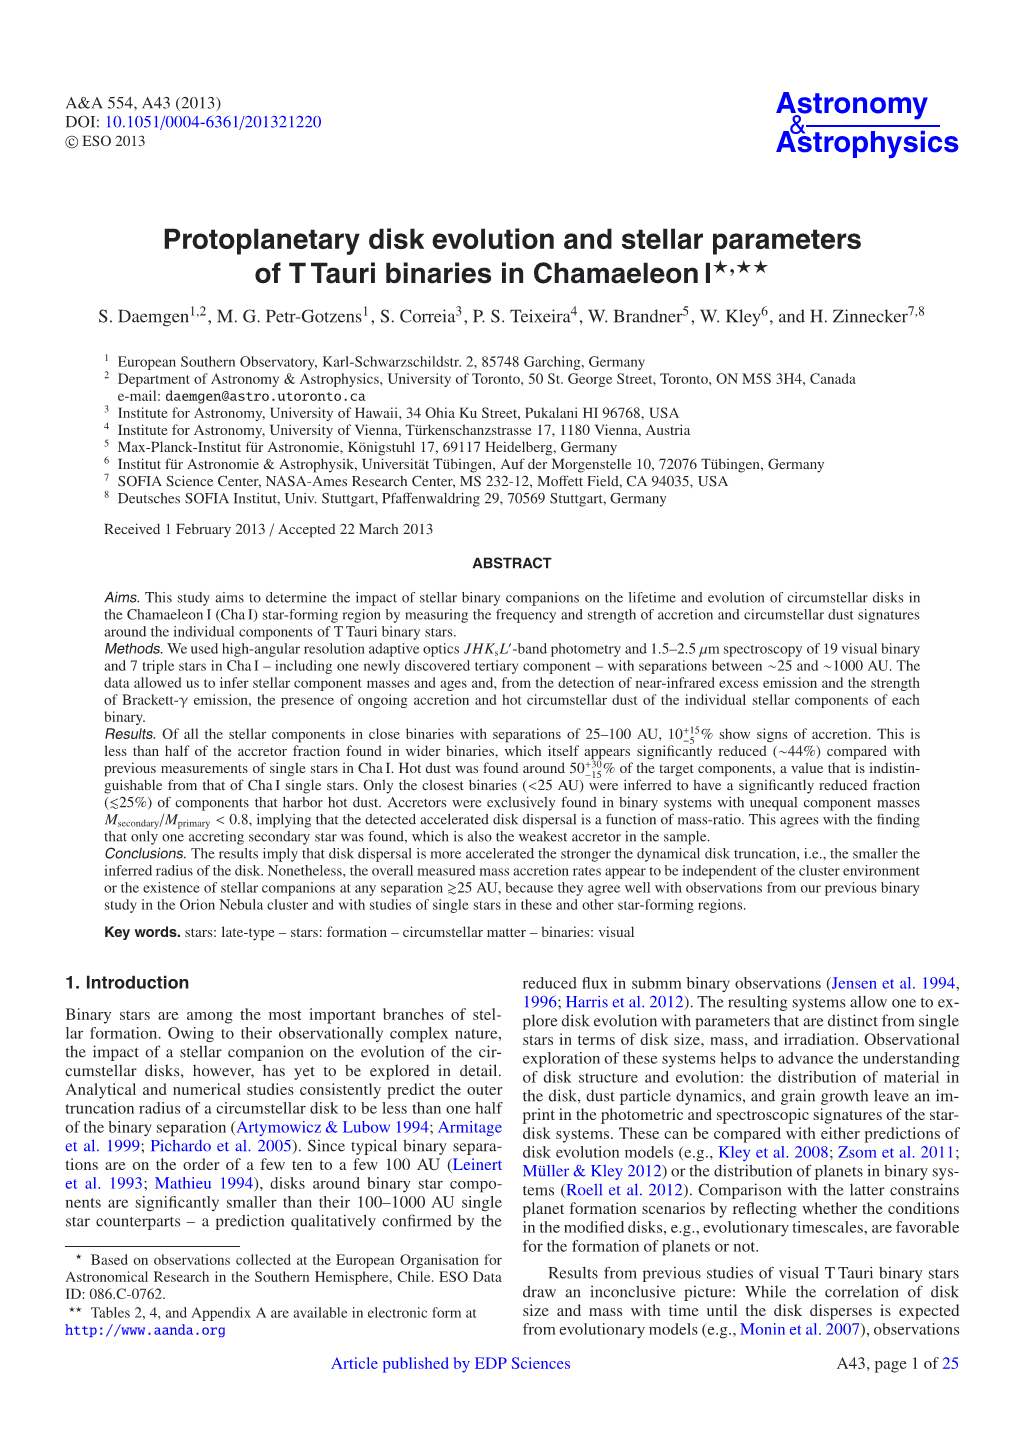 Protoplanetary Disk Evolution and Stellar Parameters of T Tauri Binaries in Chamaeleon I�,